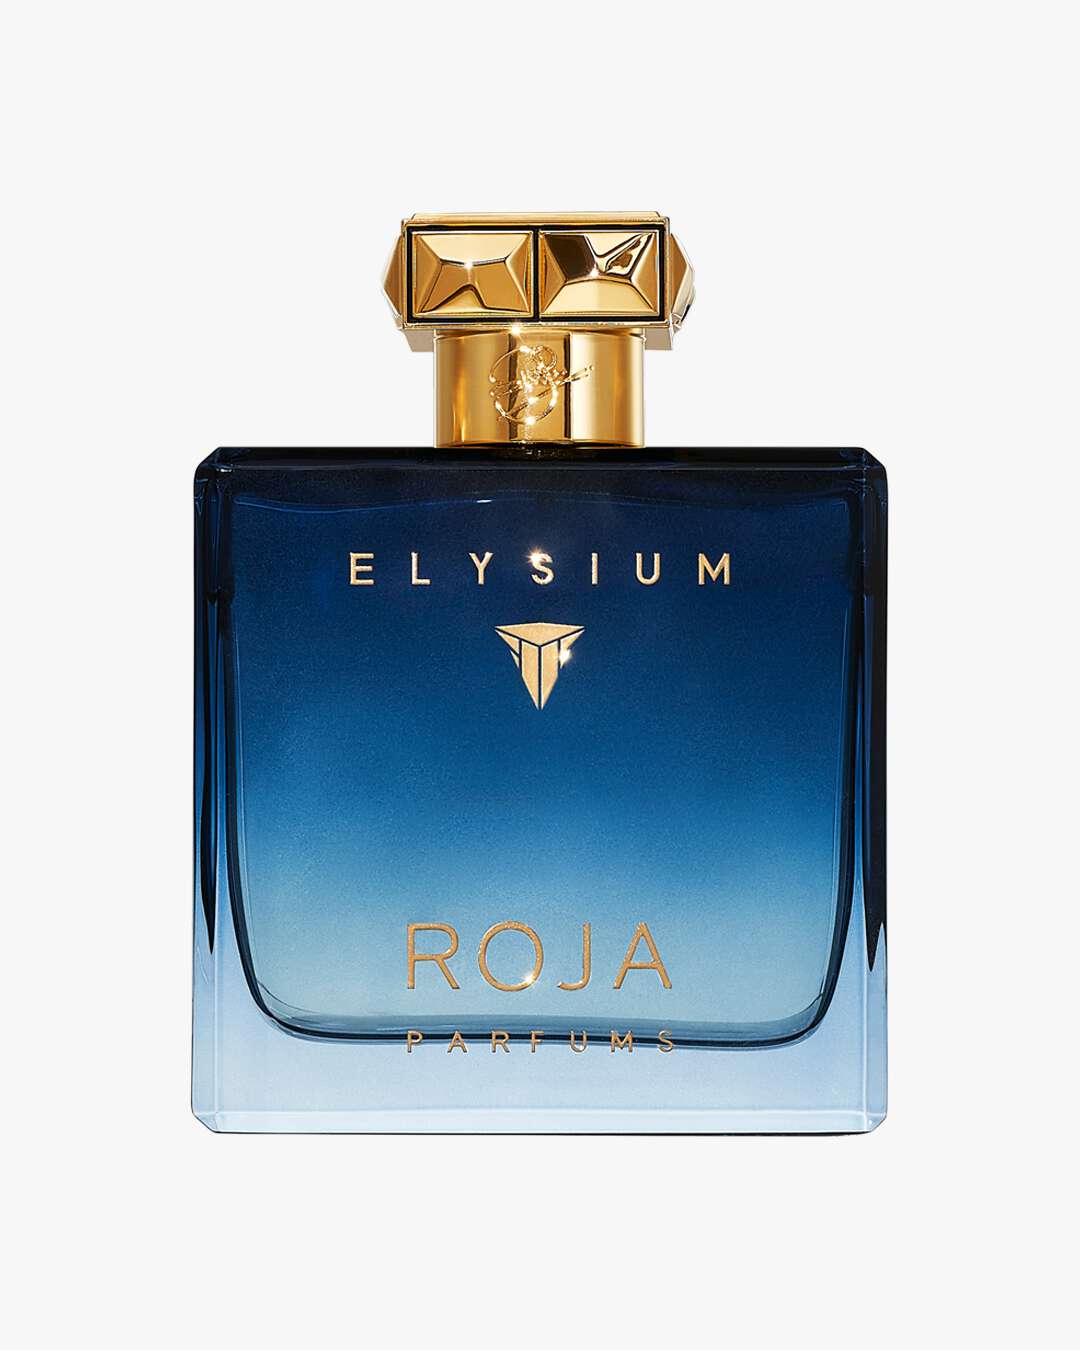 ELYSIUM Parfum Cologne 100 ml